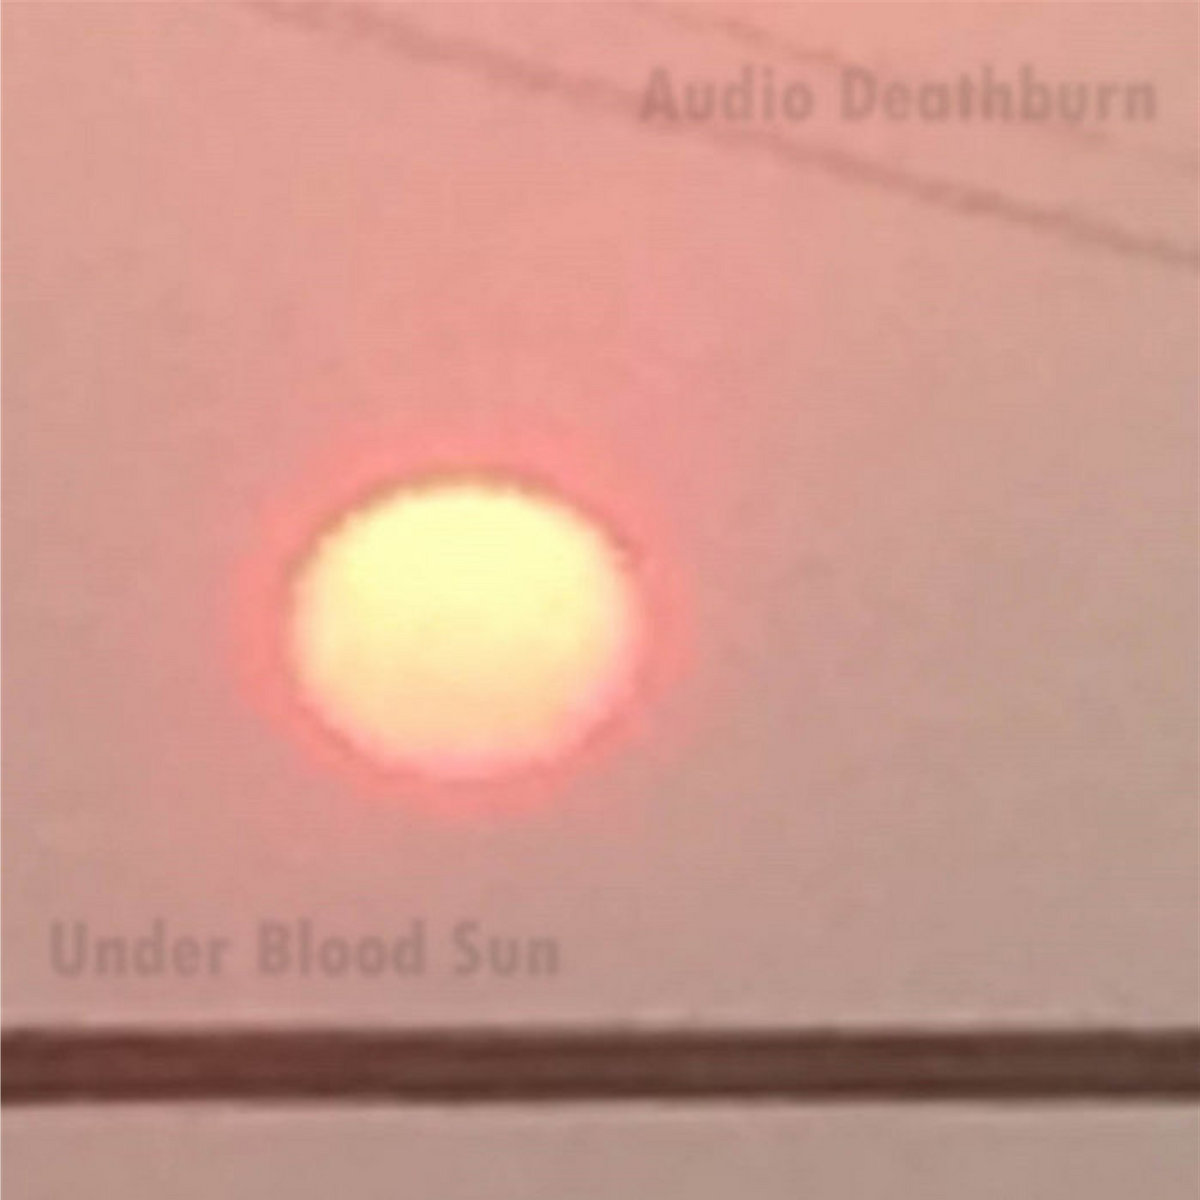 Under the Blood-Red Sun by Graham Salisbury